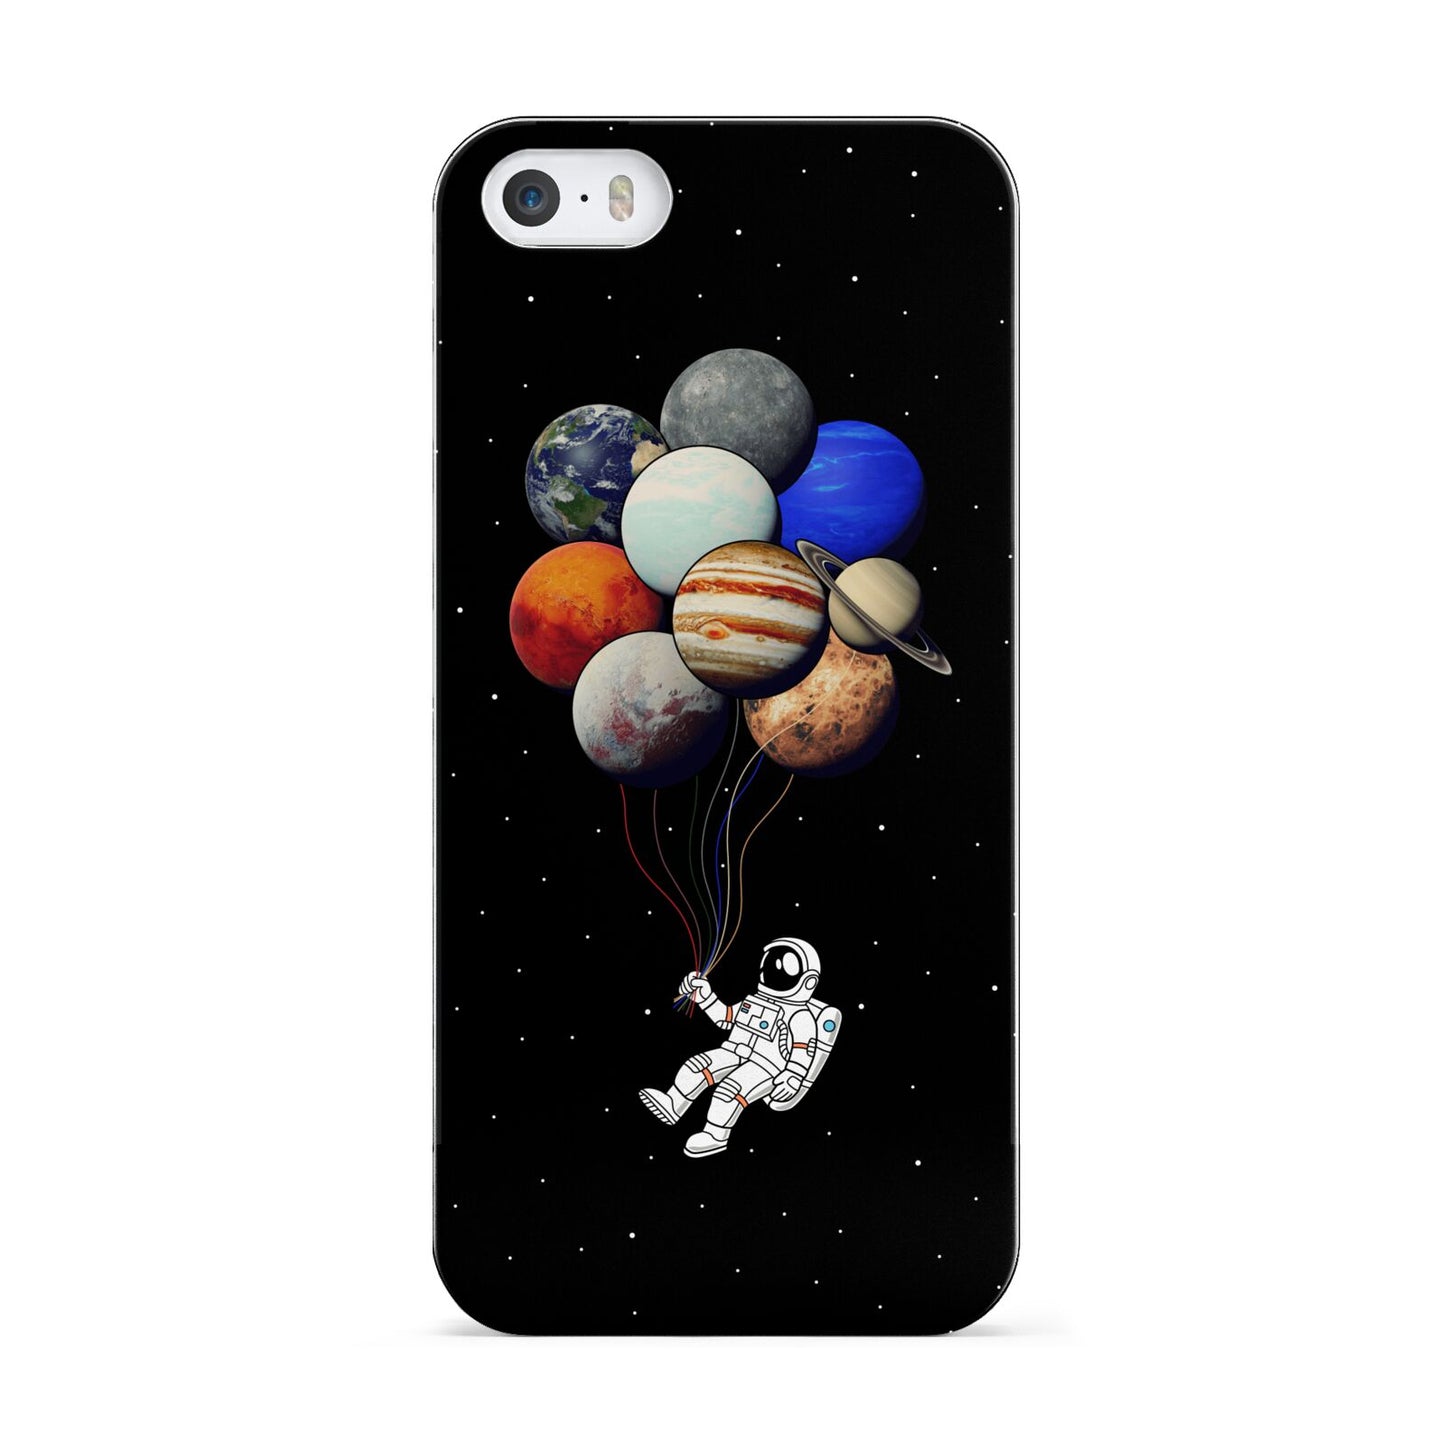 Astronaut Planet Balloons Apple iPhone 5 Case